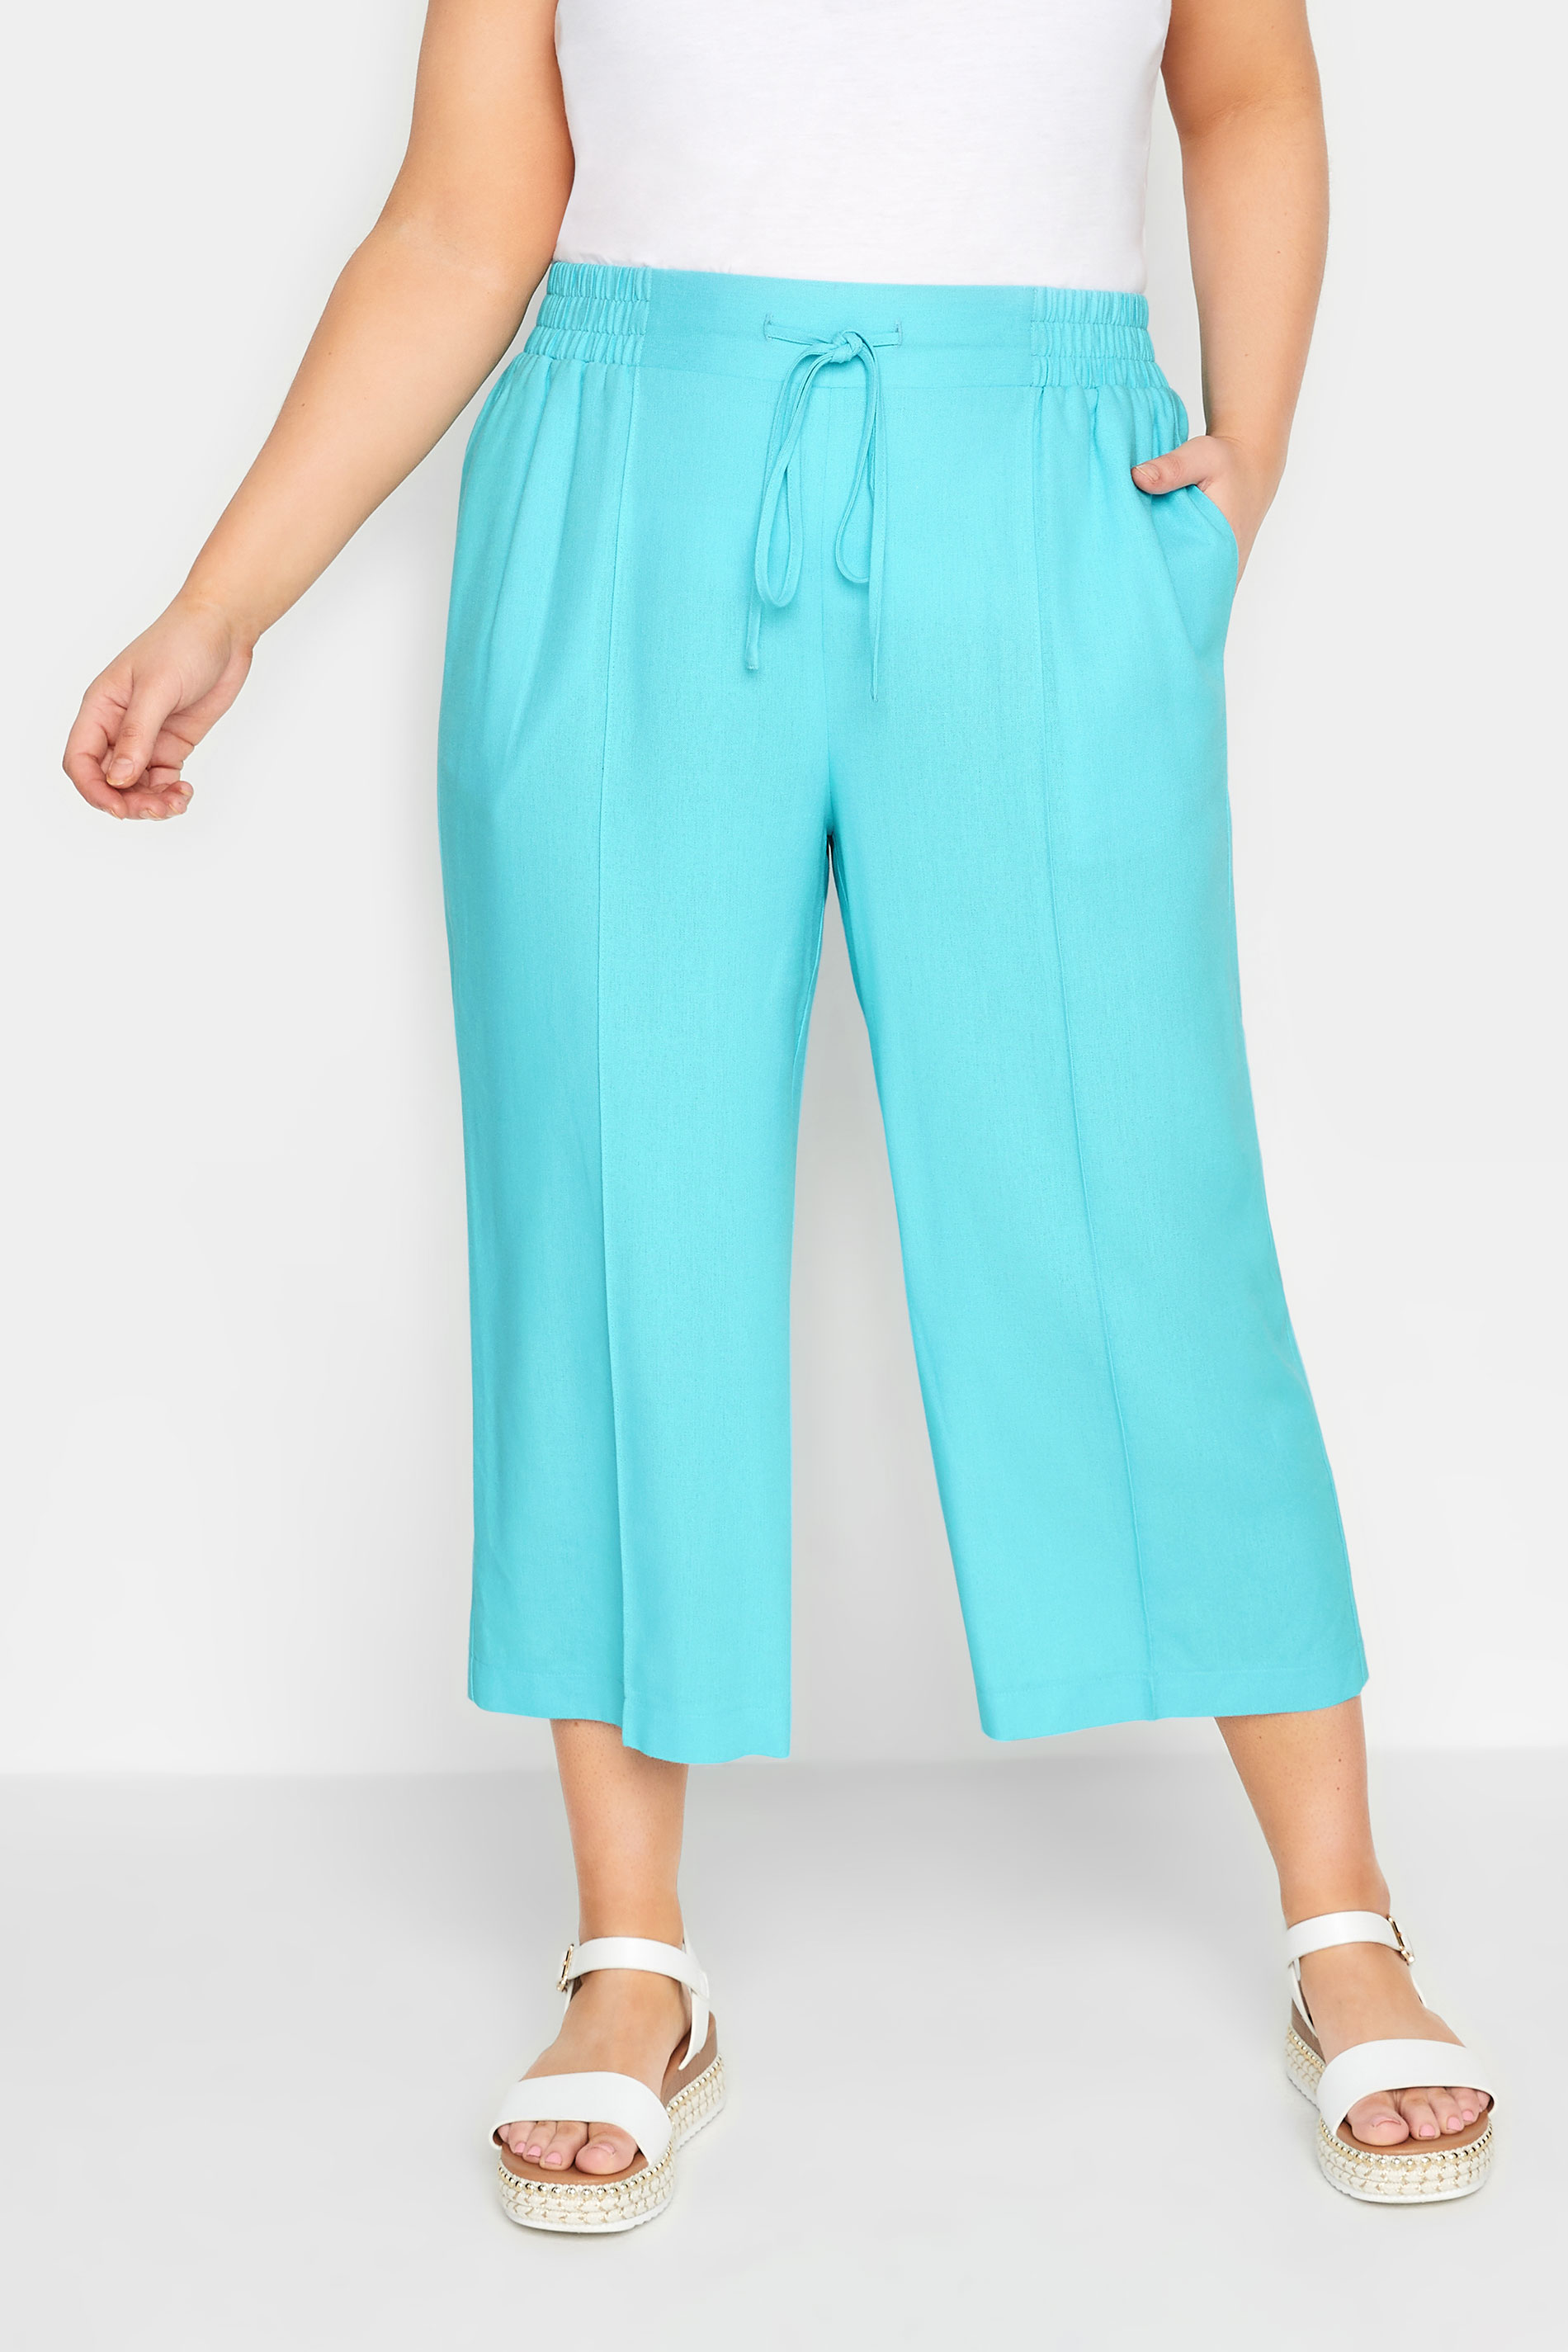 YOURS Plus Size Aqua Blue Linen Culottes | Yours Clothing 1